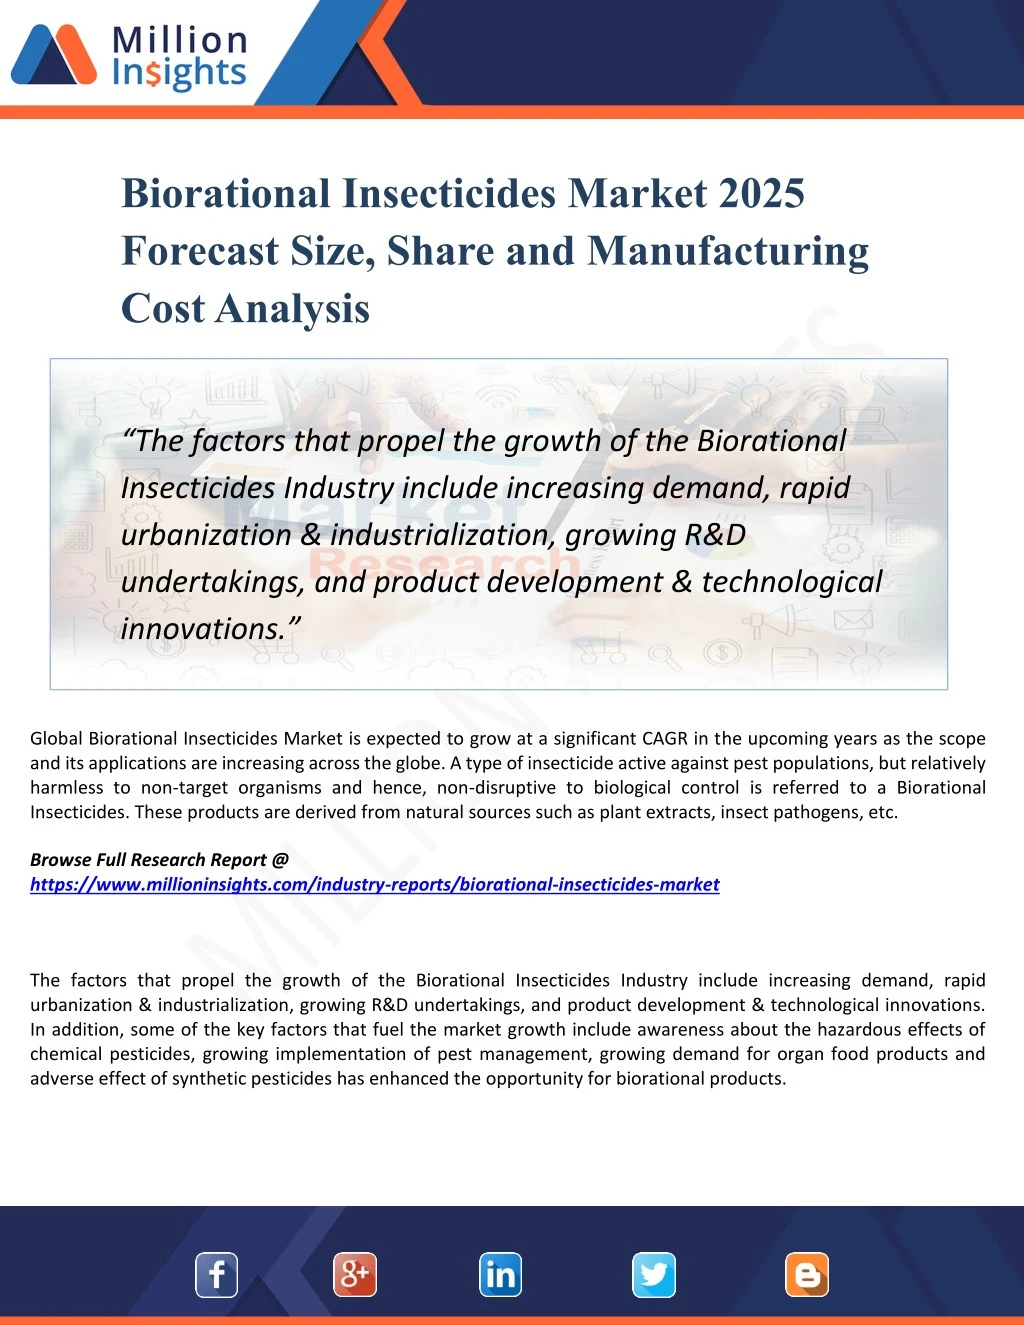 biorational insecticides market 2025 forecast